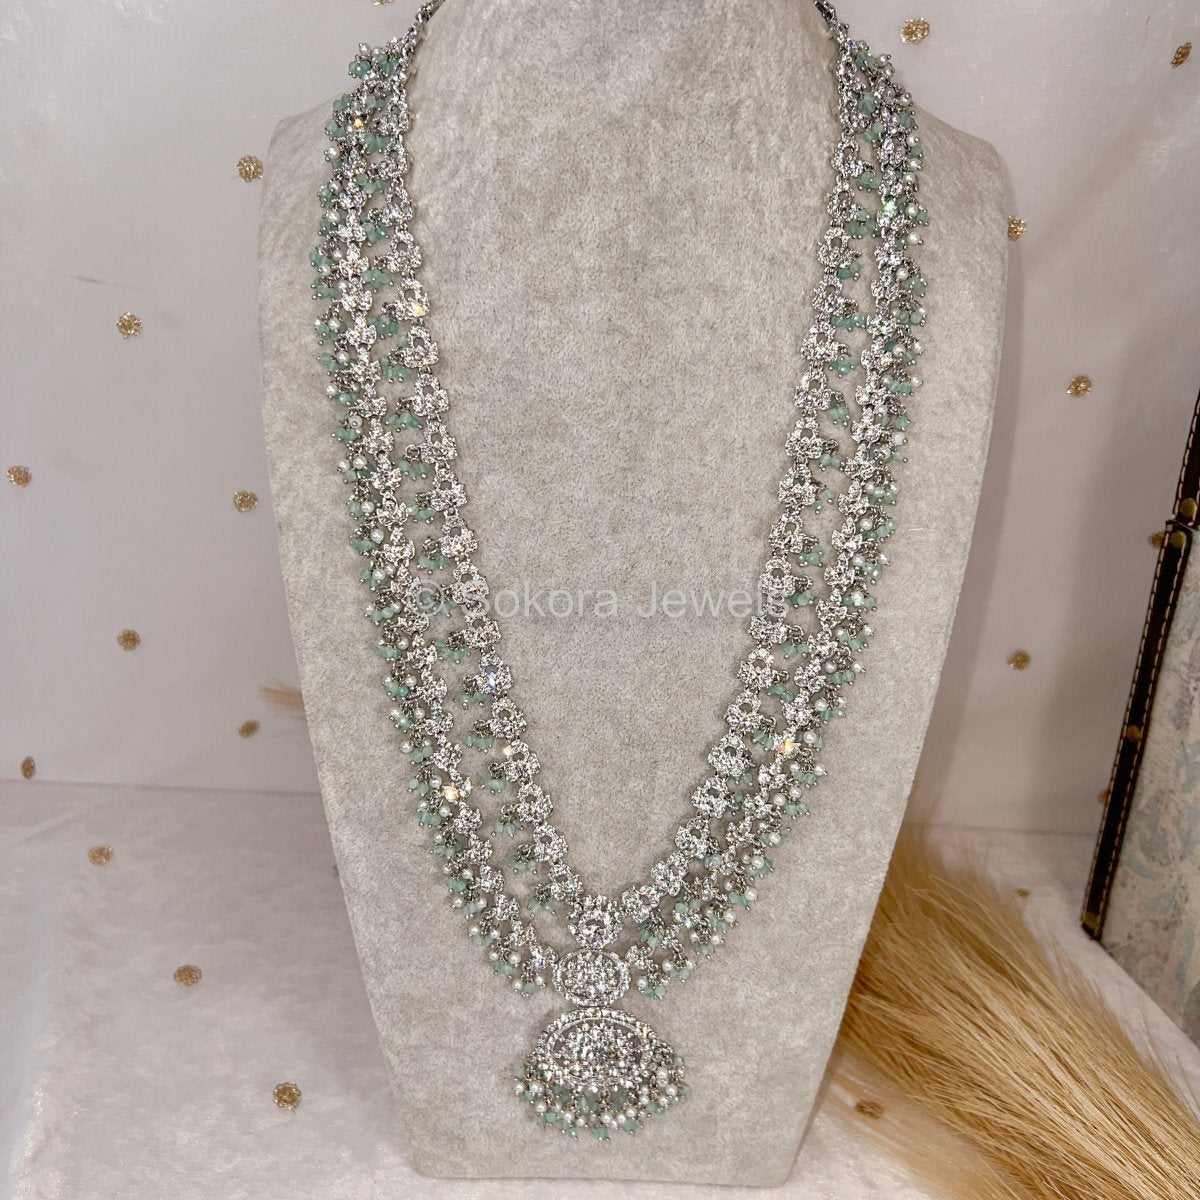 Amulya Long Silver Necklace - Mint - SOKORA JEWELSAmulya Long Silver Necklace - Mint